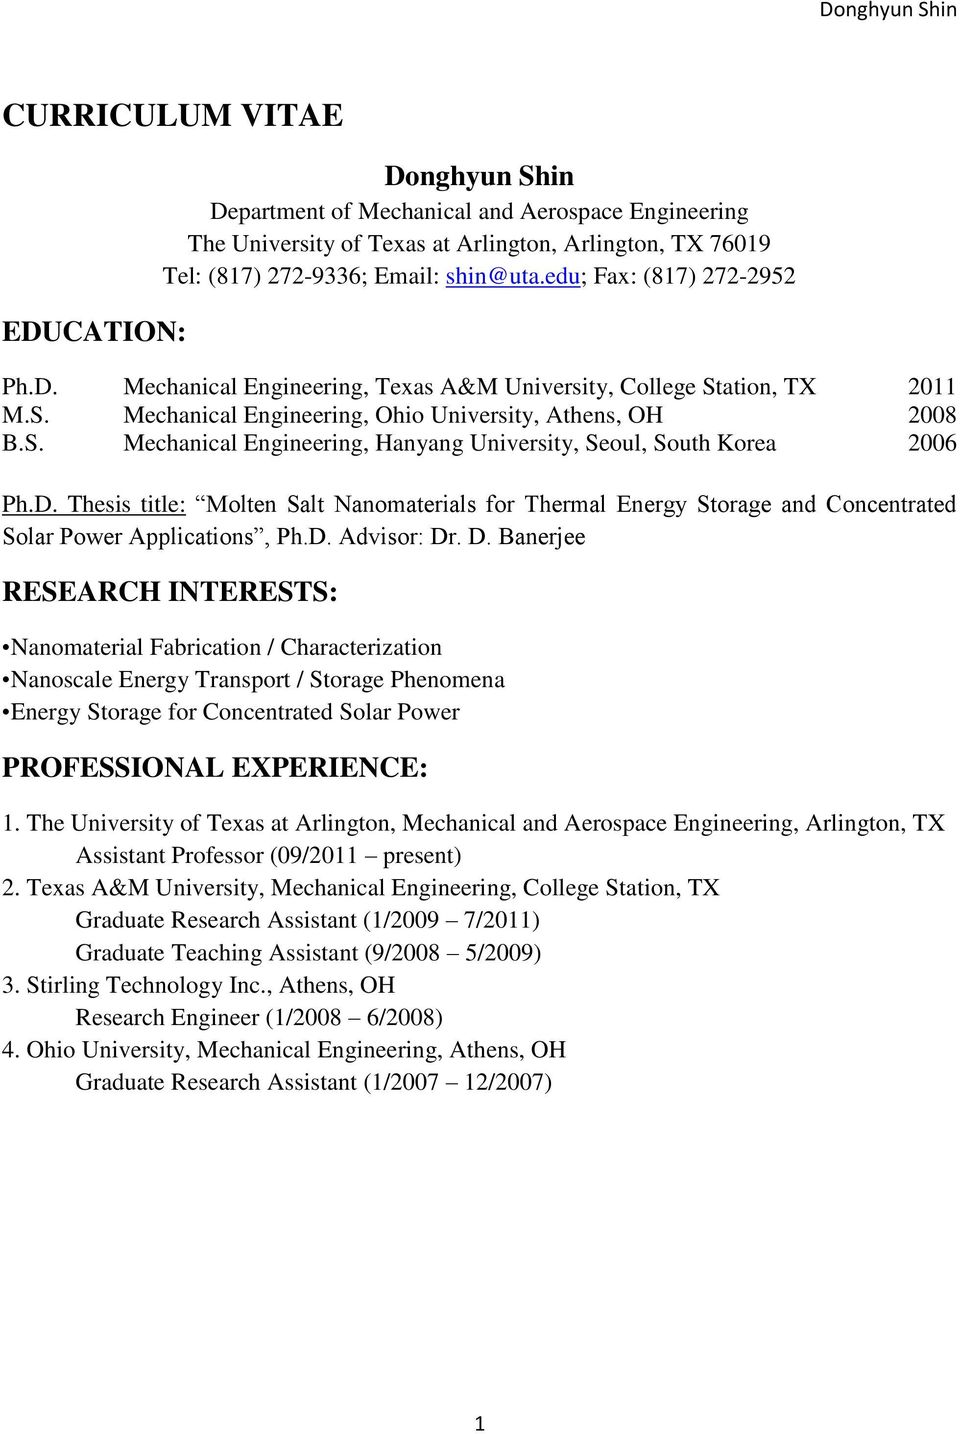 Curriculum Vitae Donghyun Shin Education Research Interests